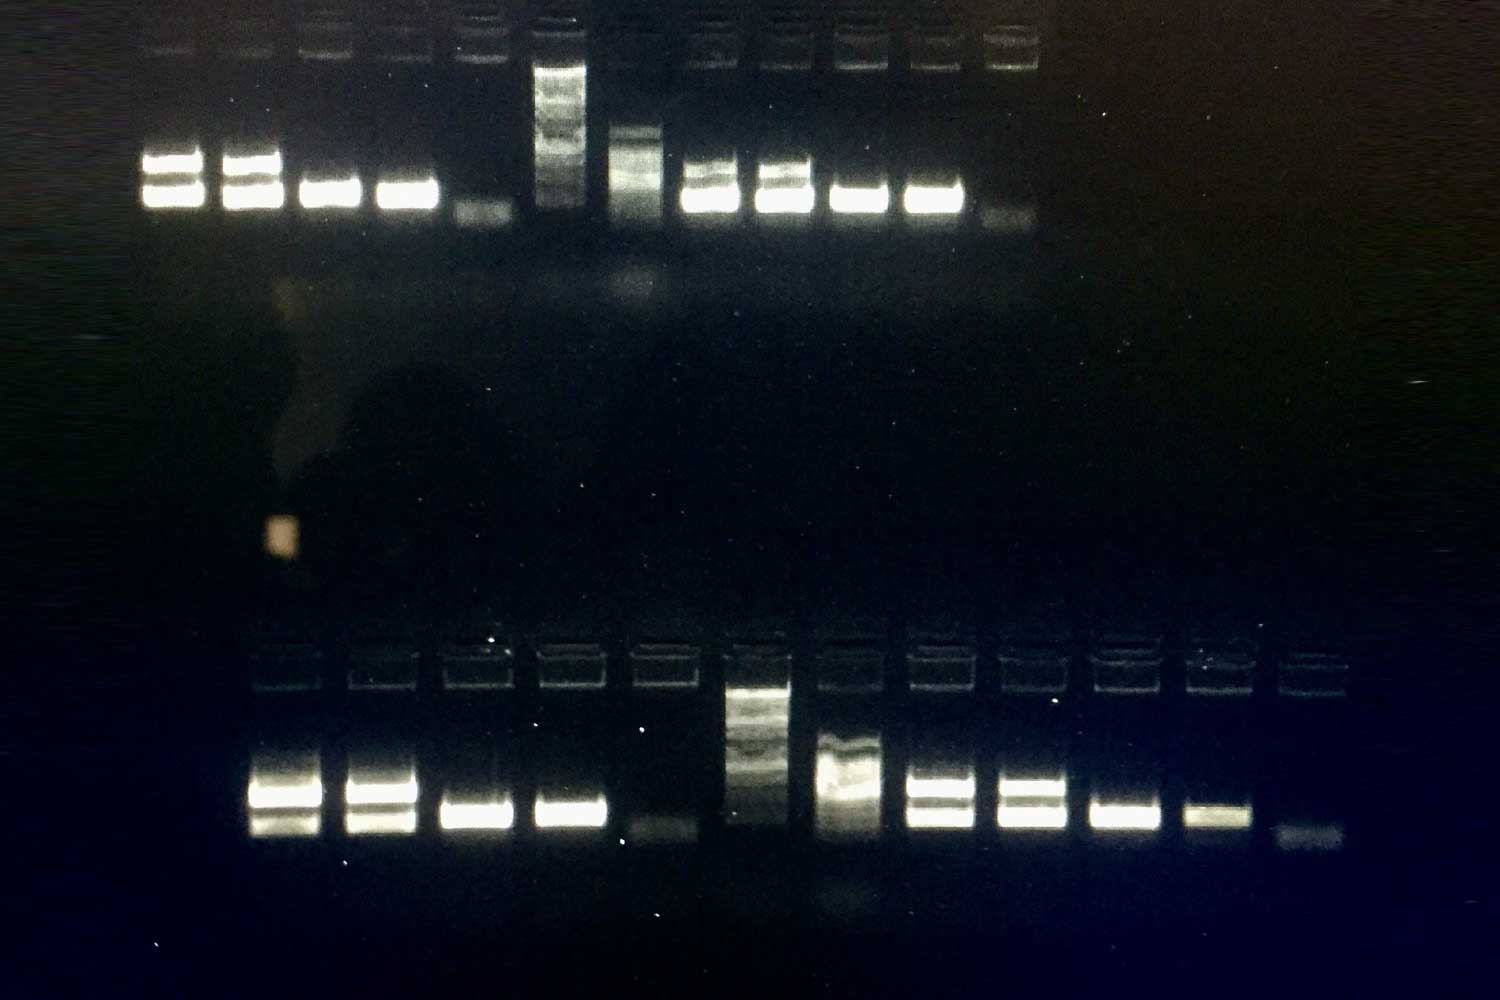 Colony PCR gel electrophoresis results